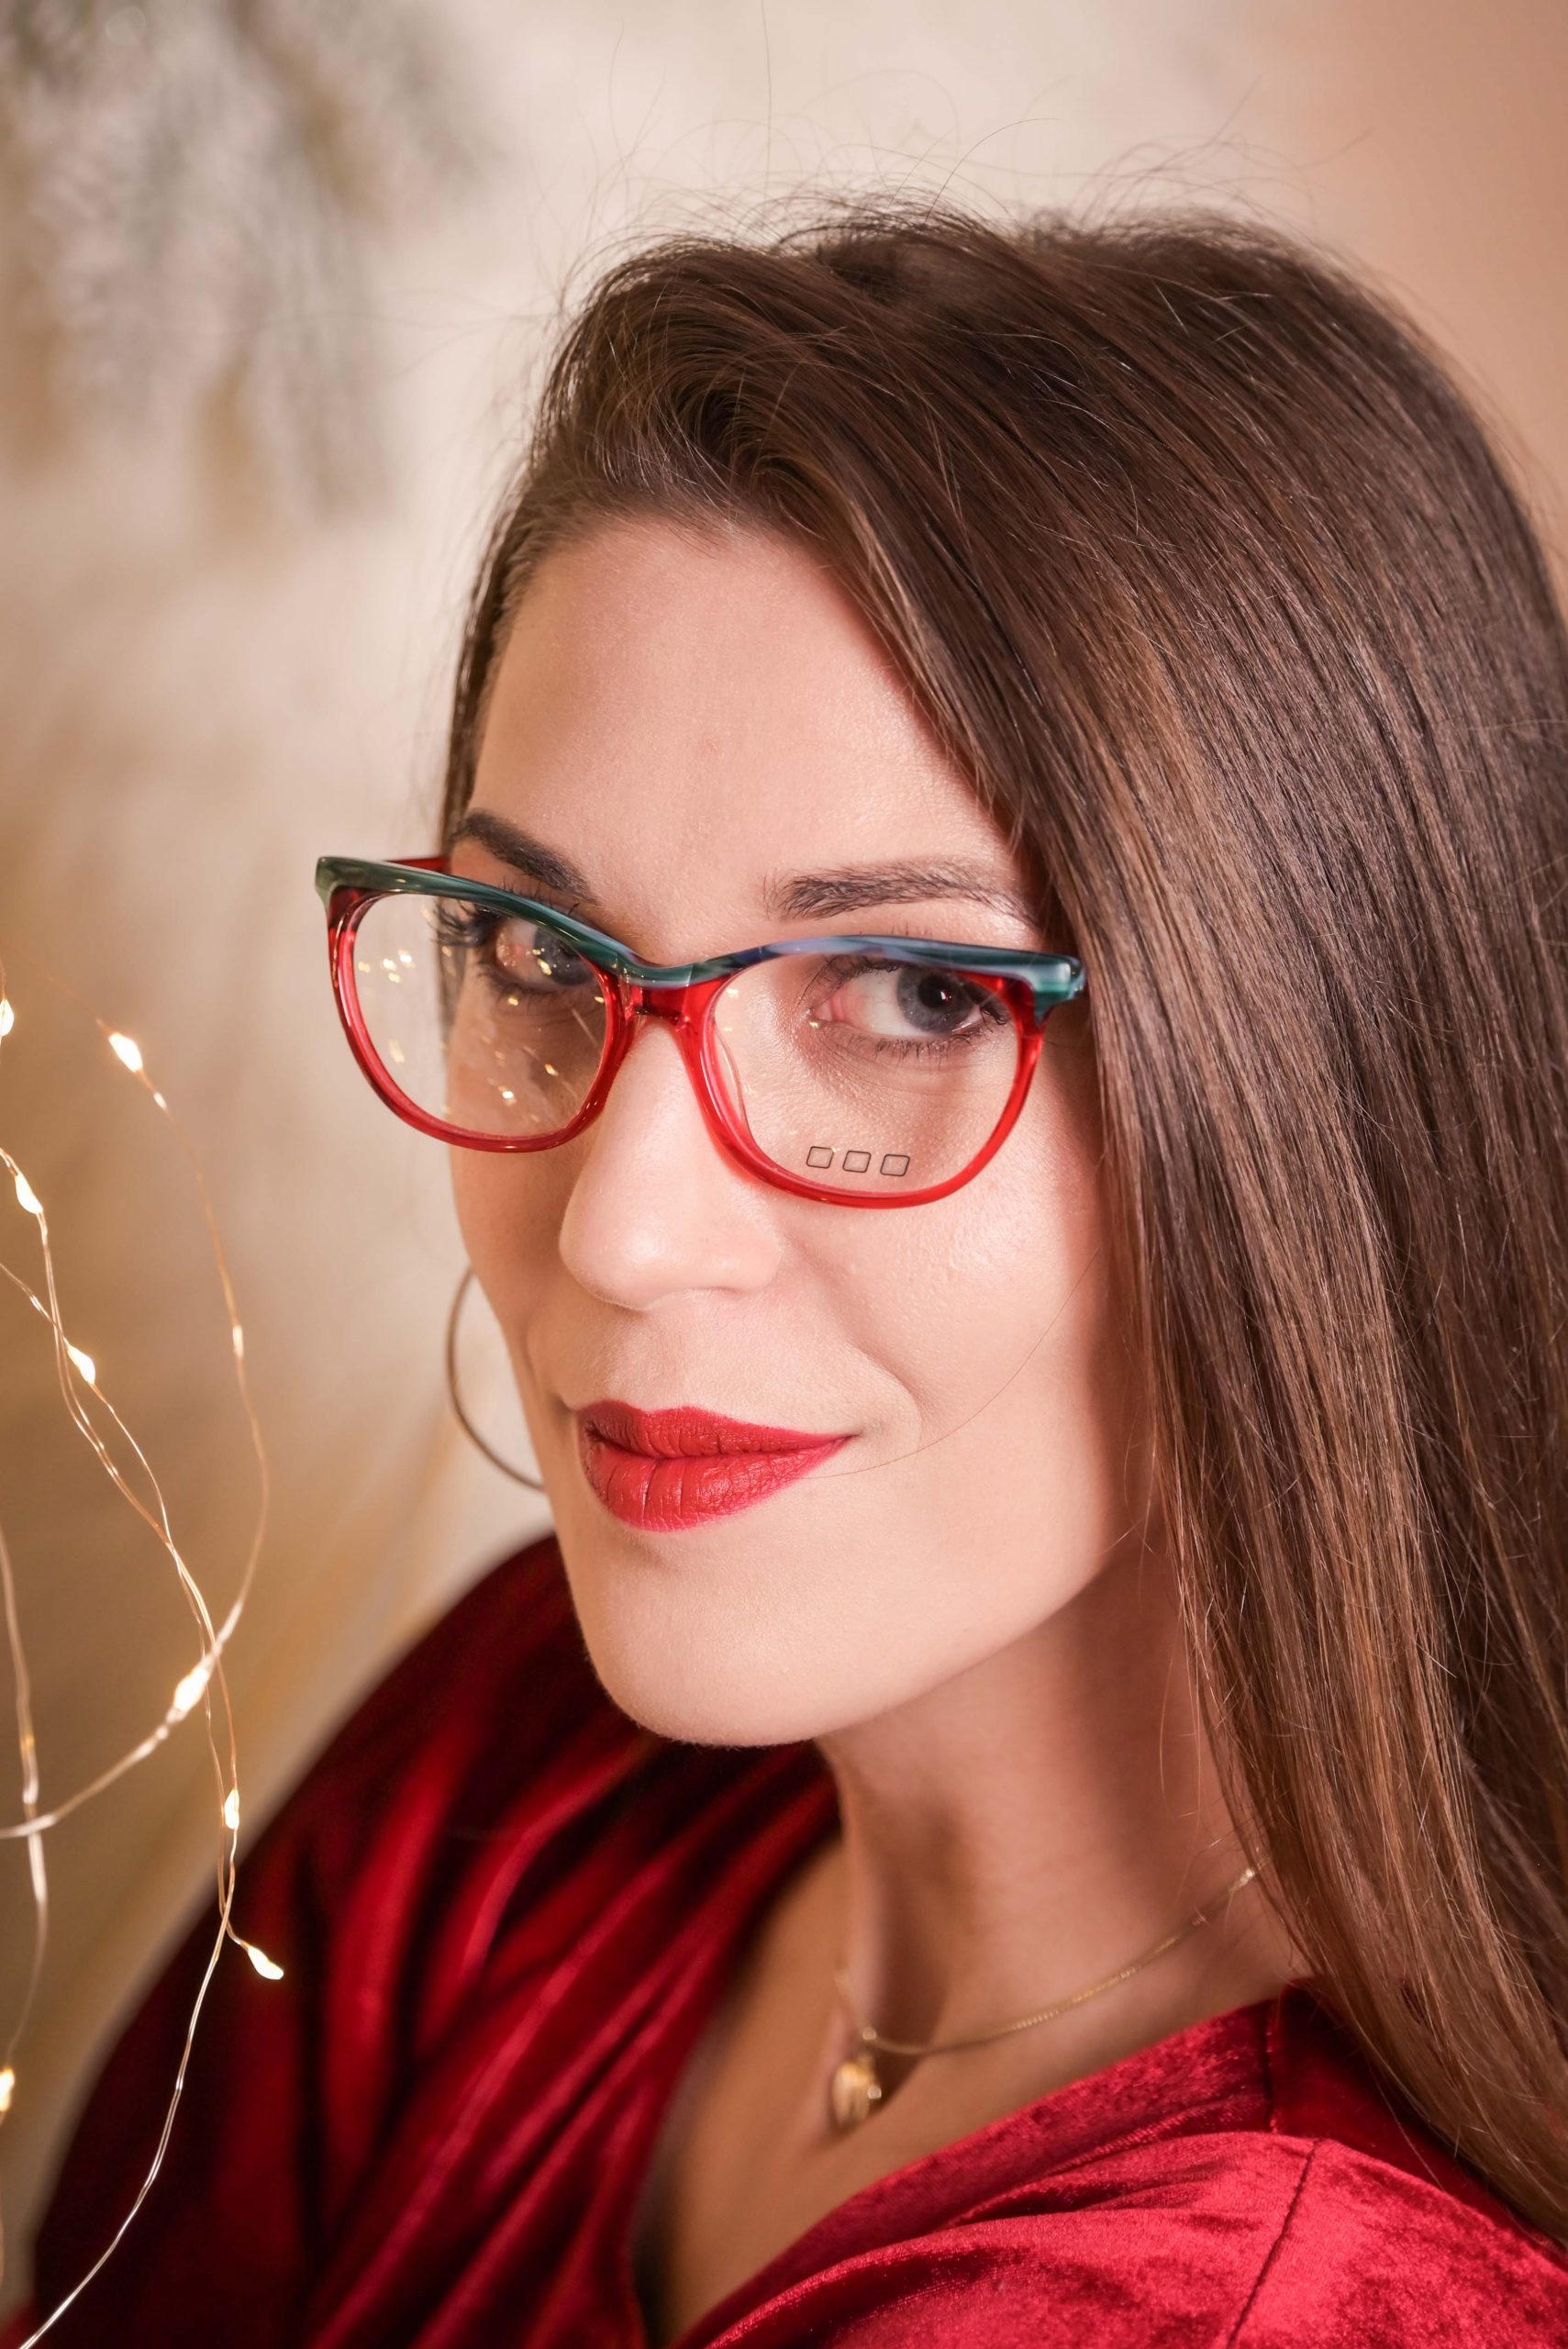 Očna optika Damir ima najljepše modele naočala za blagdane pred nama!